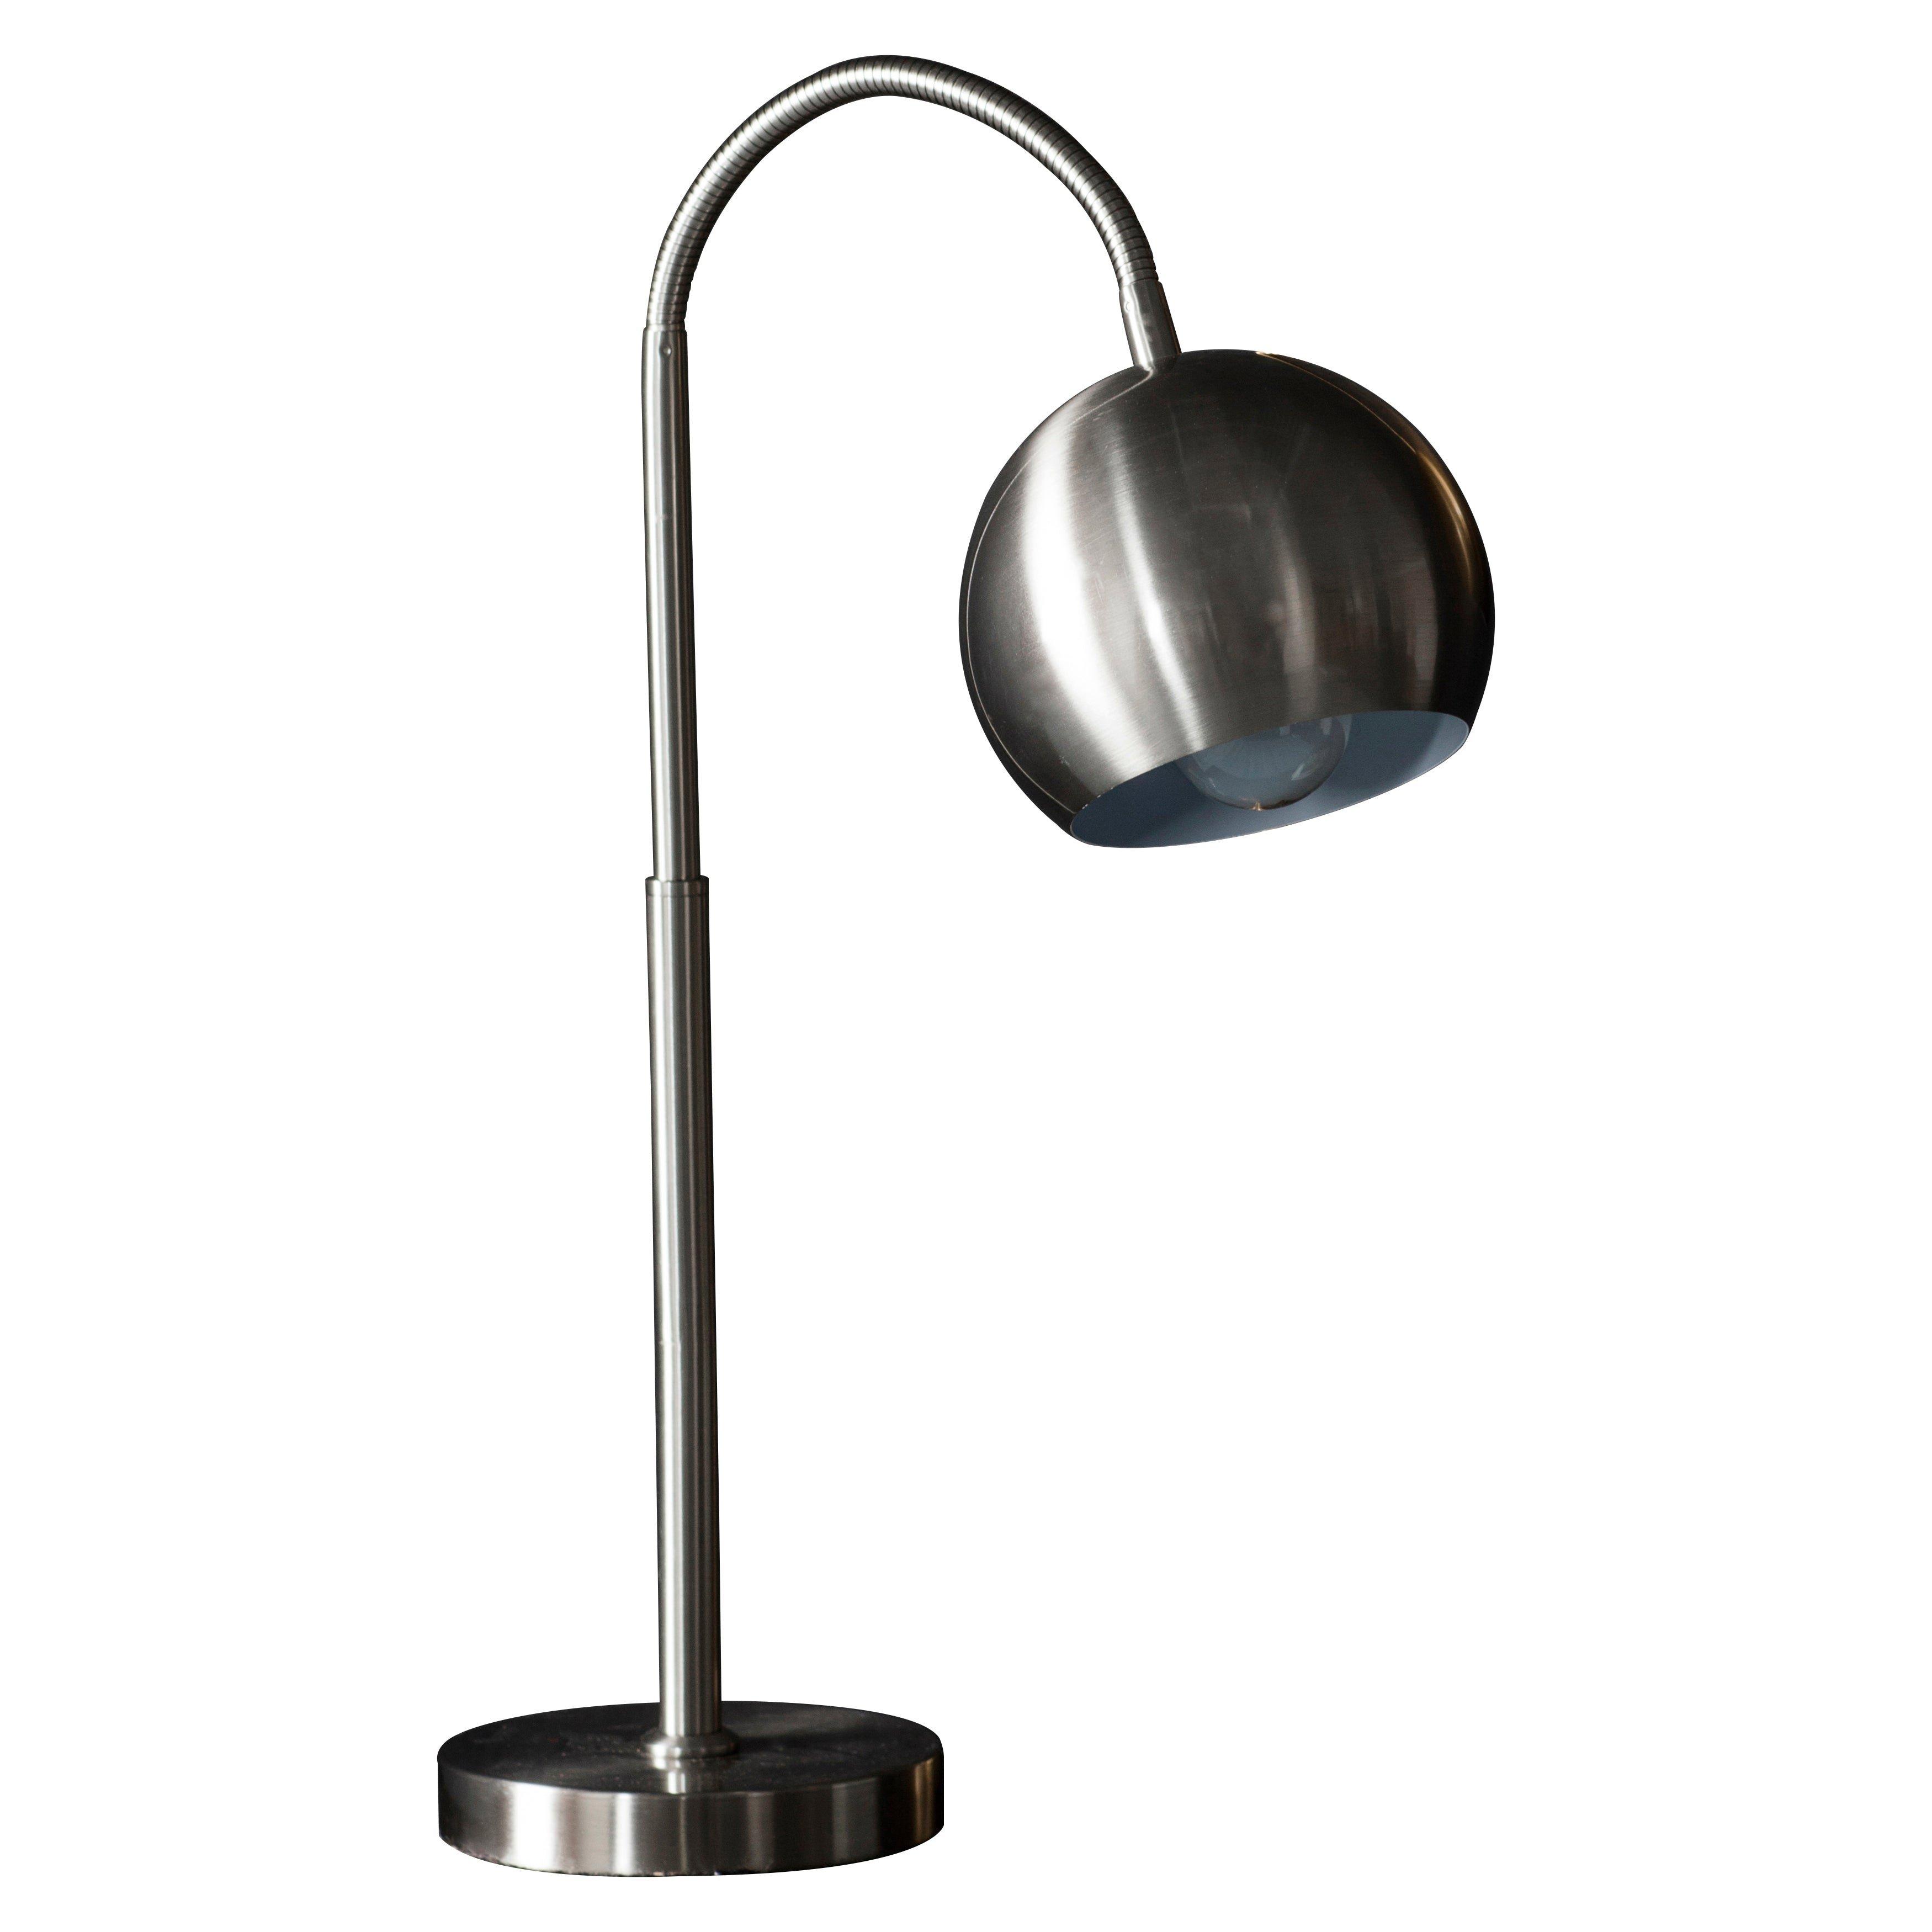 Table Lamp Brushed Chrome Plate 10W LED E27 Bedside Light Flexible Arm